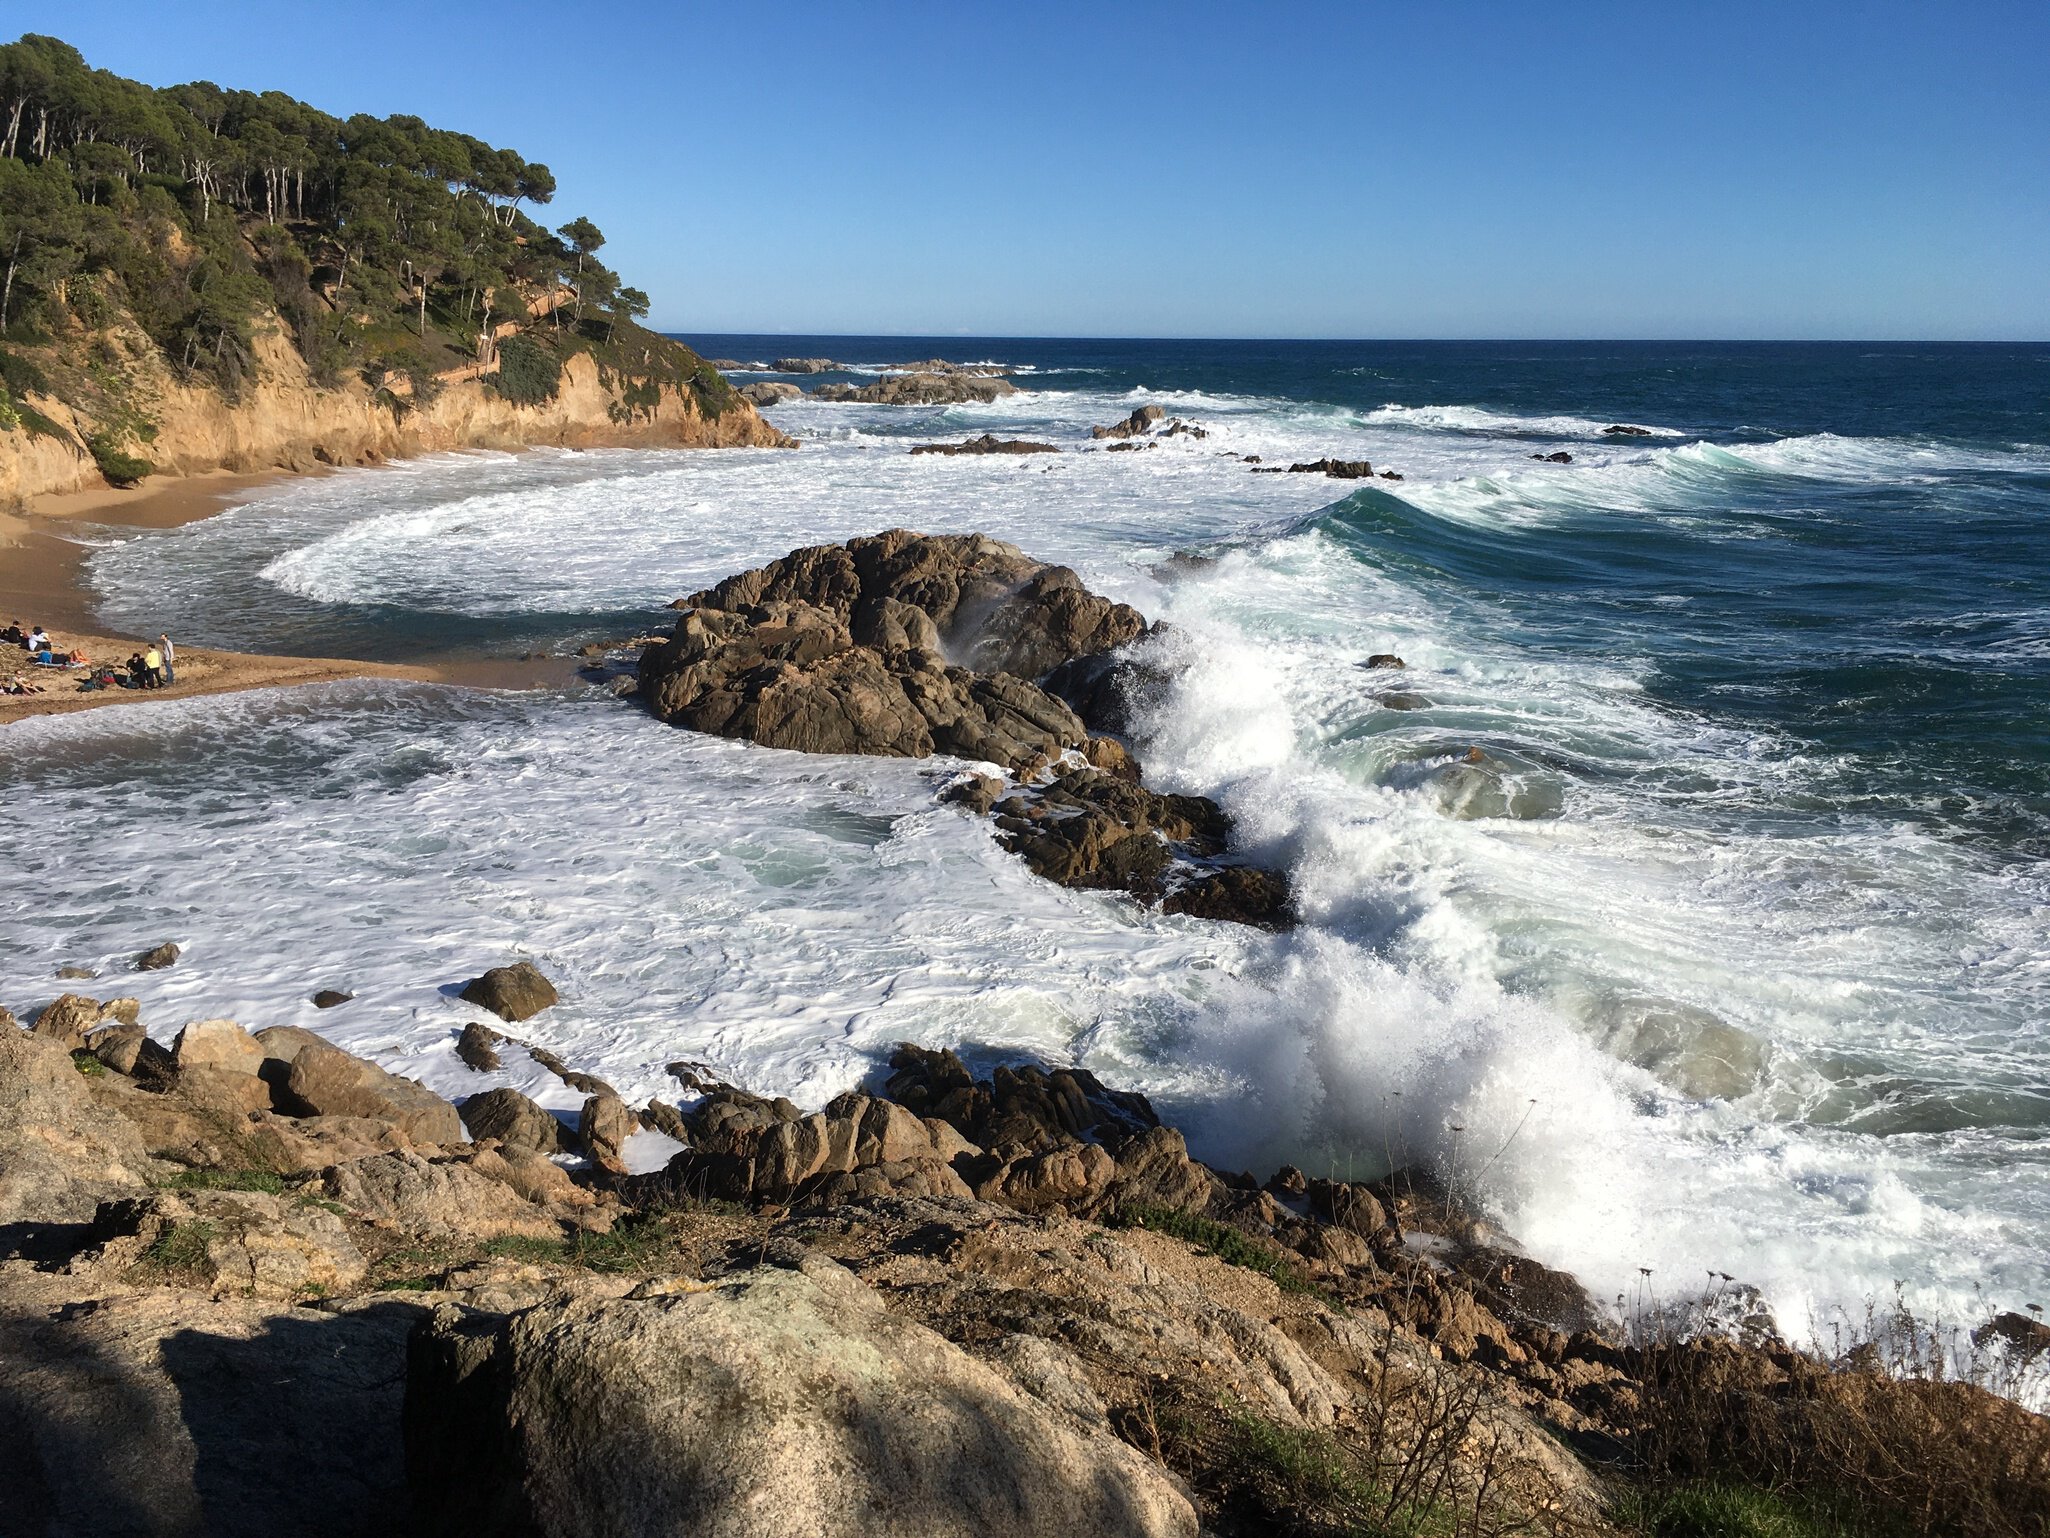 Dynamic coastal environment with waves crashing